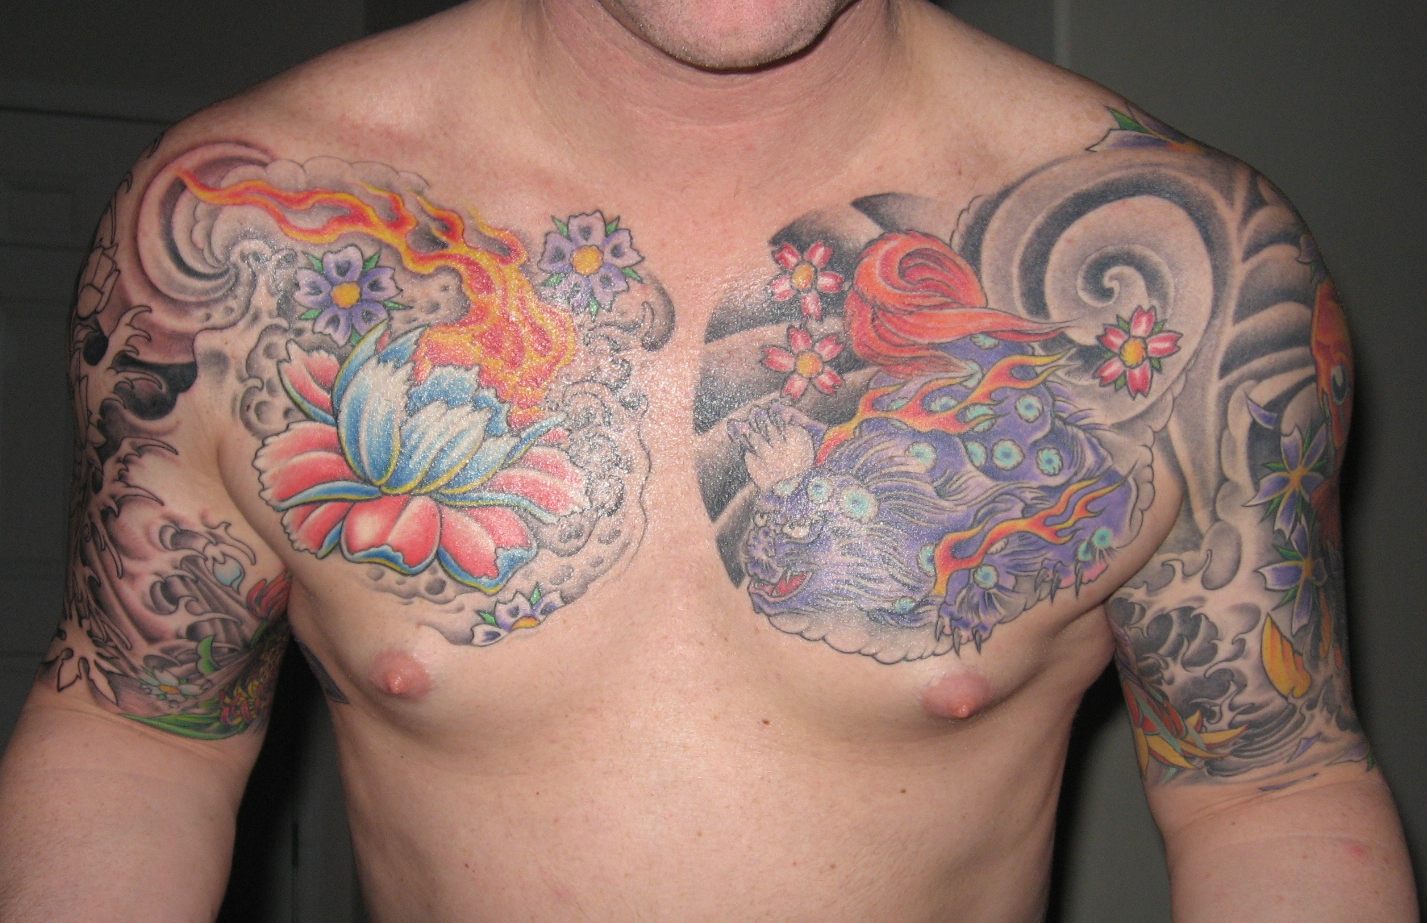 100 Best Tattoo Designs for Men in 2015